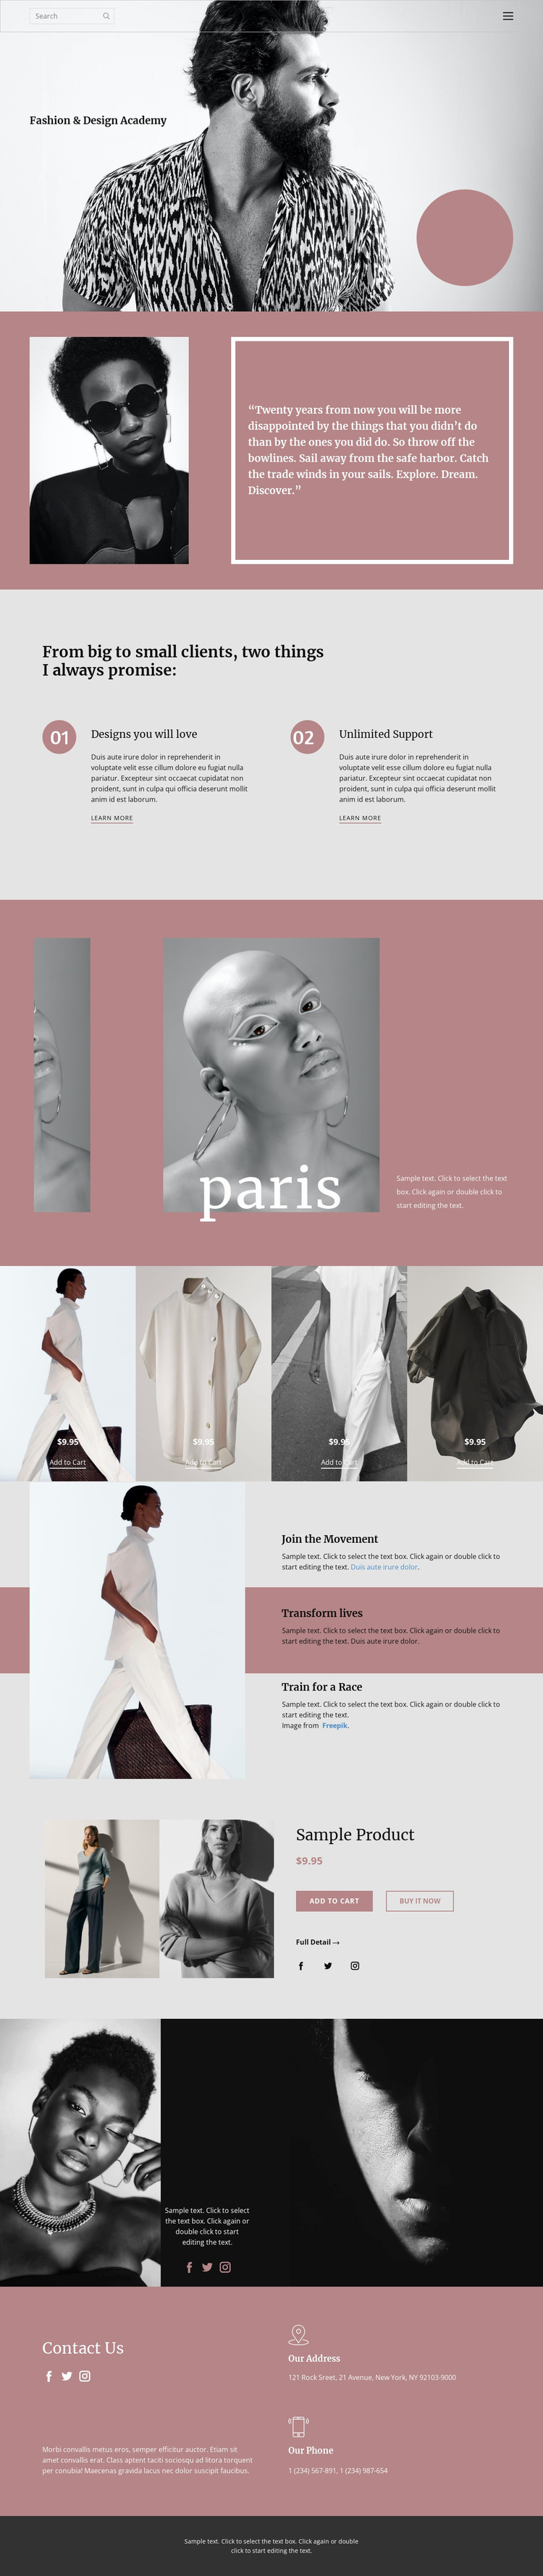 Fashion studio Website Mockup